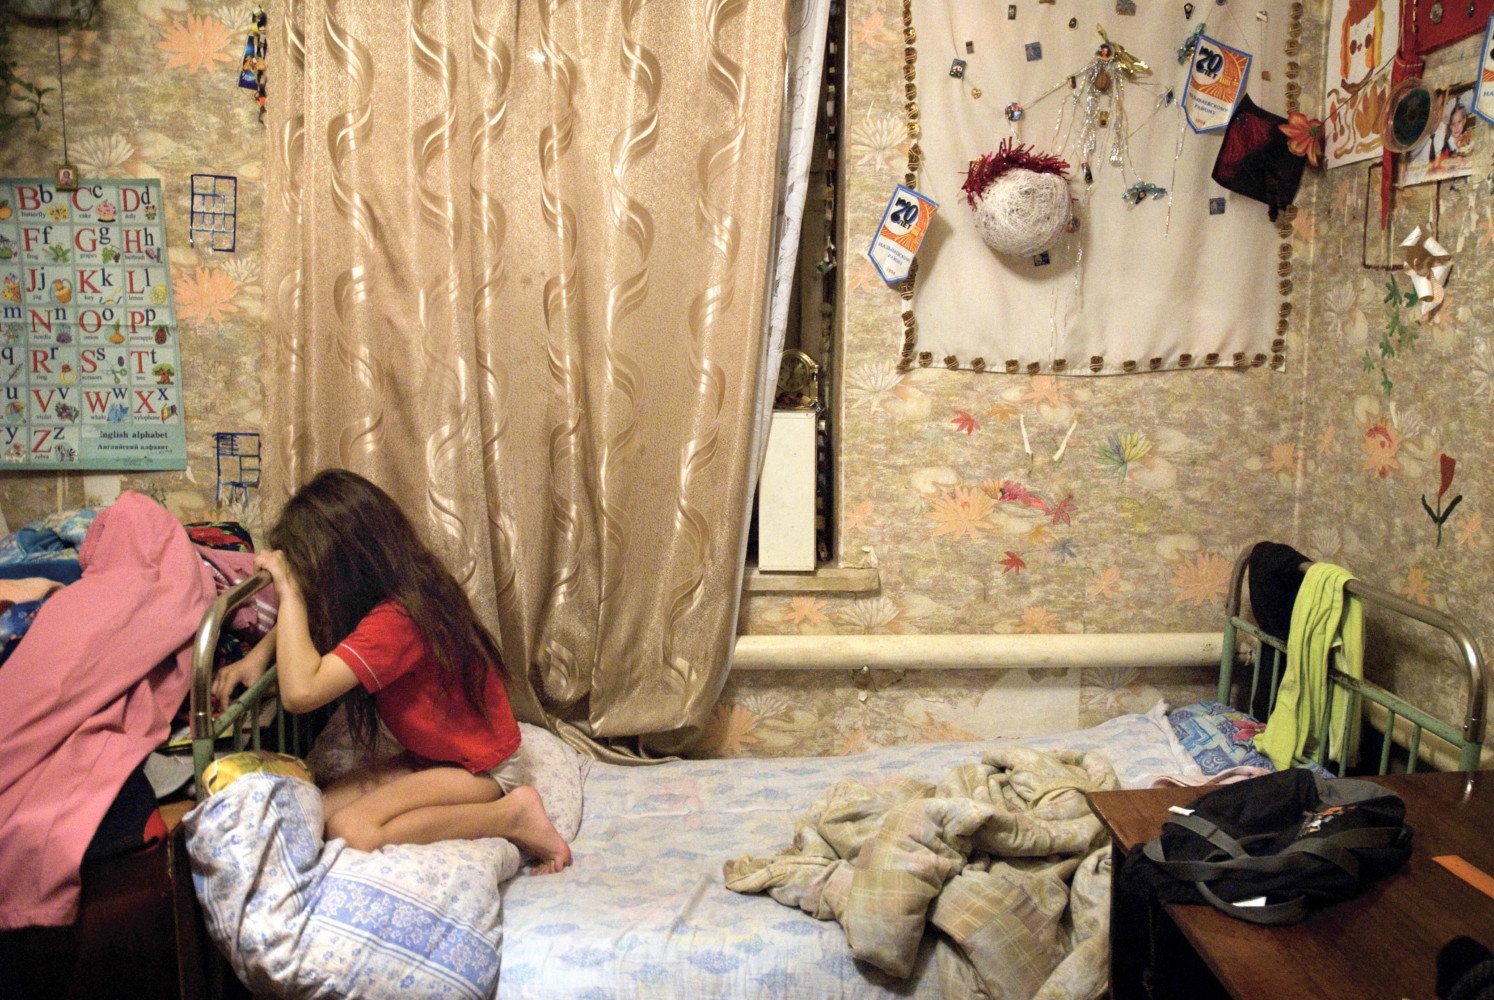 Siberian studio mouse video. Девушка в бедной квартире. Бедная комната для девочки. Нищета в квартире. Девушка из бедной семьи.